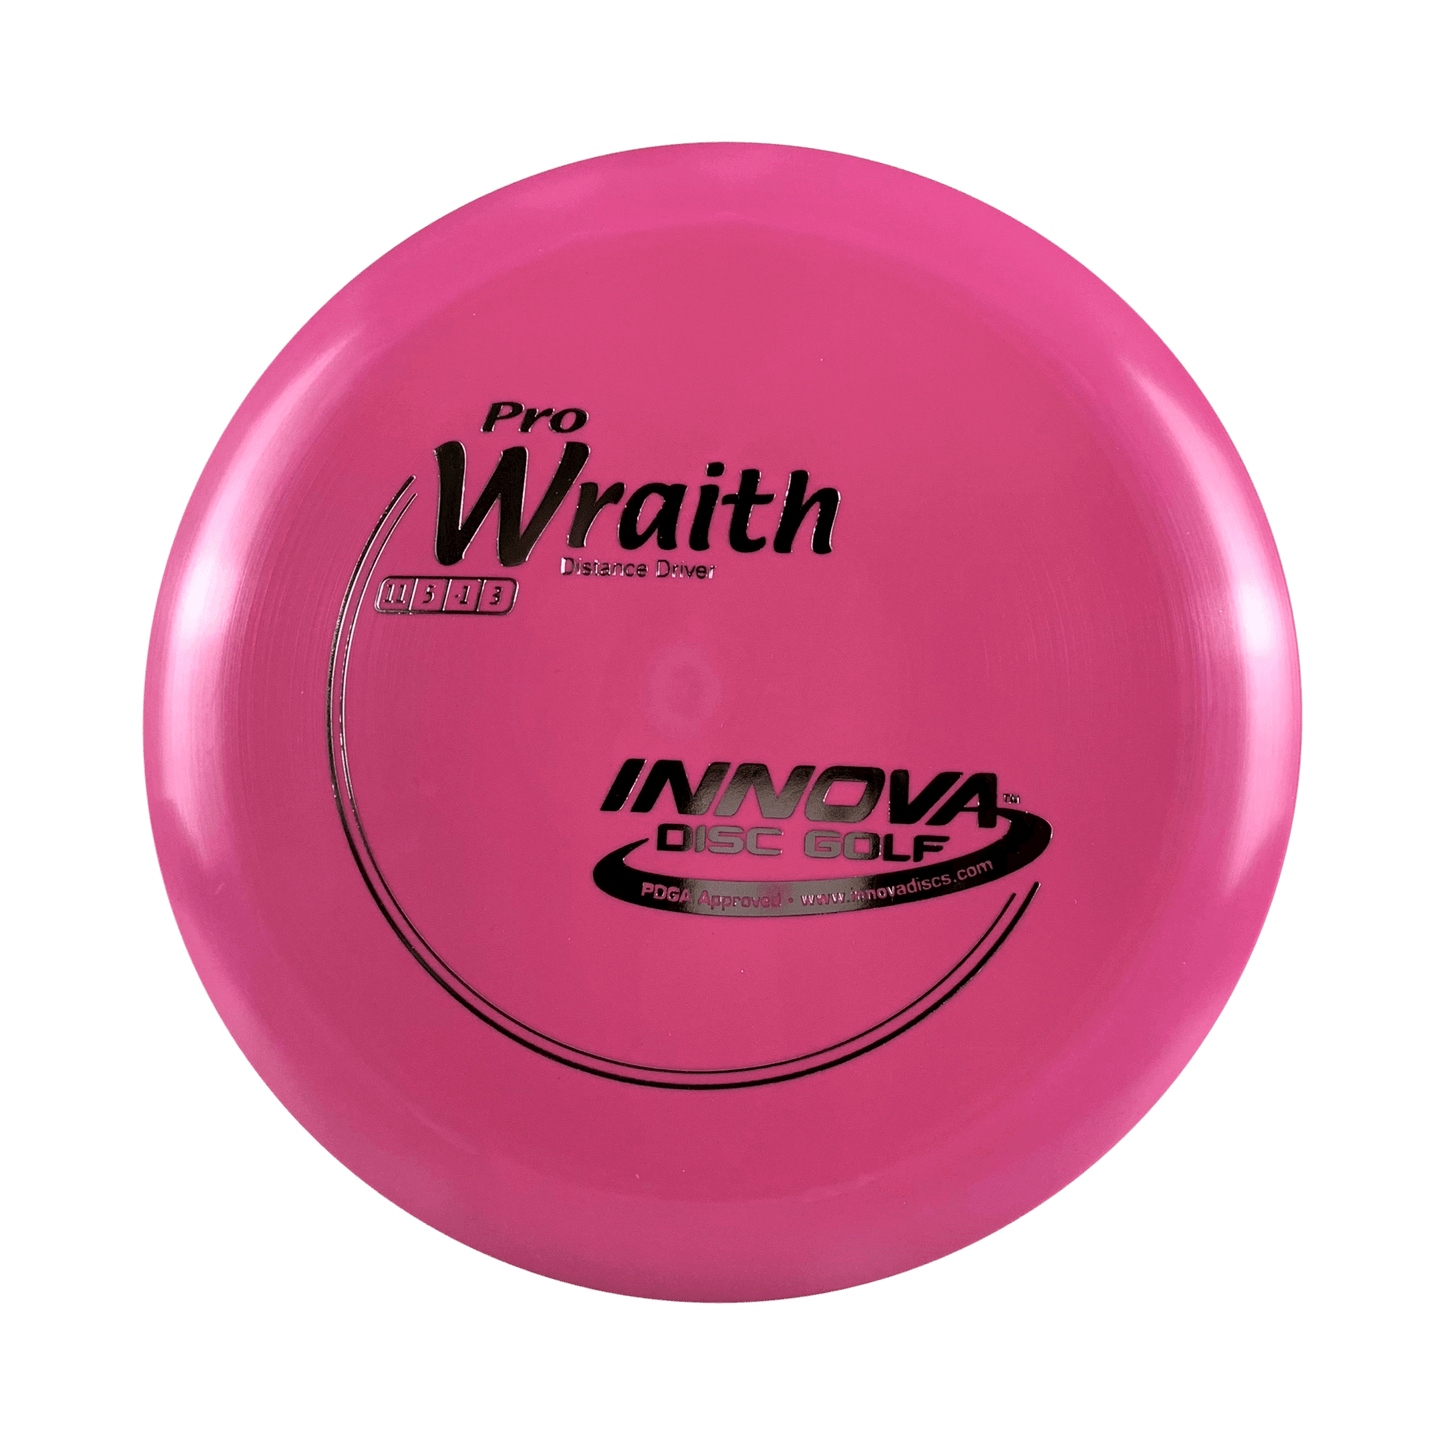 Pro Wraith Disc Innova purple 173 